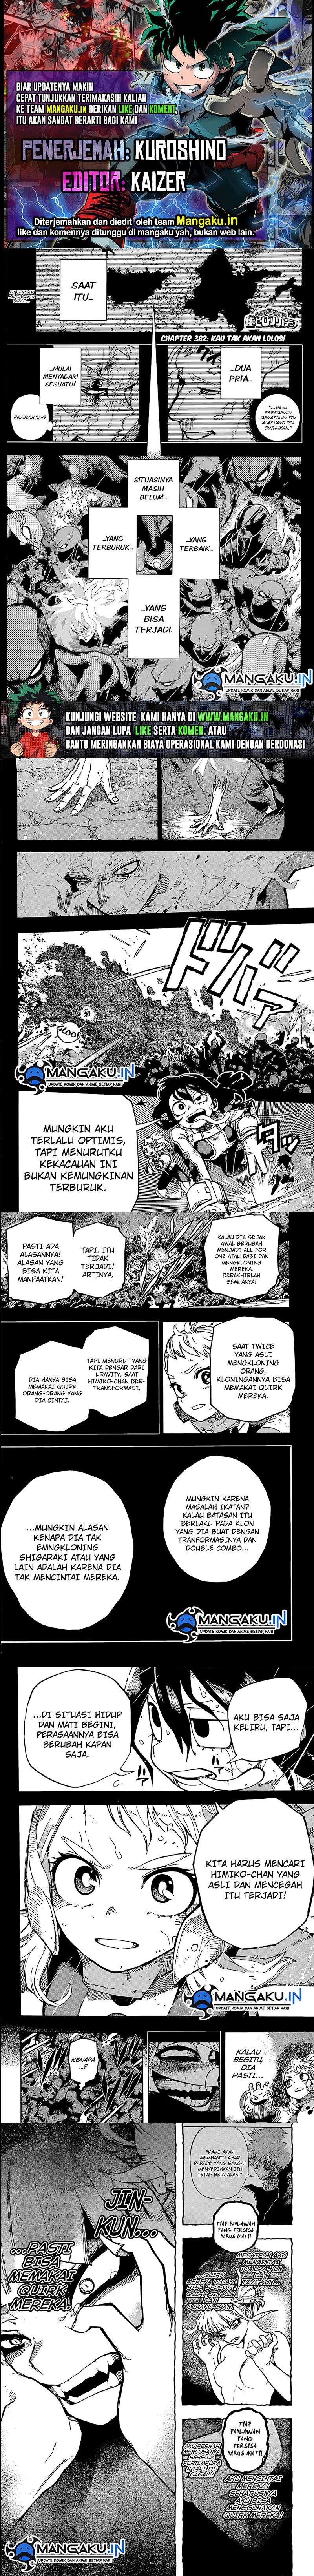 Boku no Hero Academia: Chapter 382 - Page 1